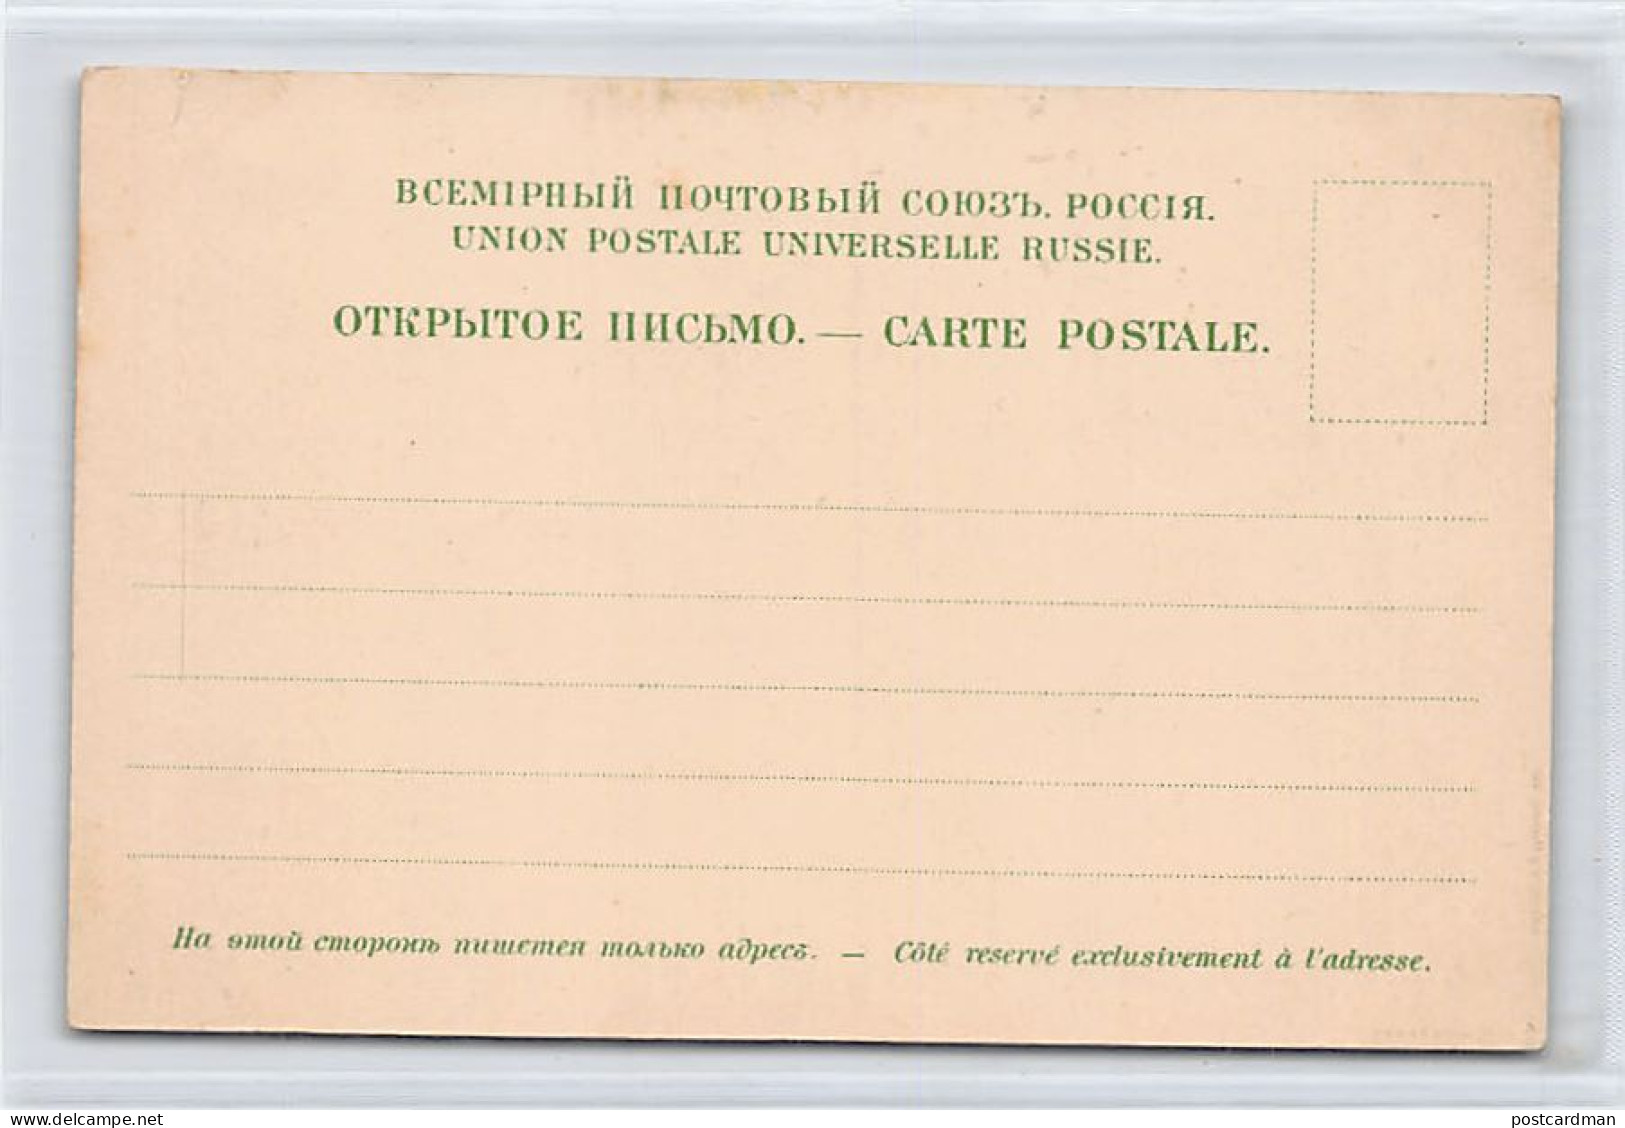 Azerbaijan - BAKU - Litho Postcard - Ramana Oil Wells - Local Type - Publ. F.I.Shreiber  - Azerbaiyan